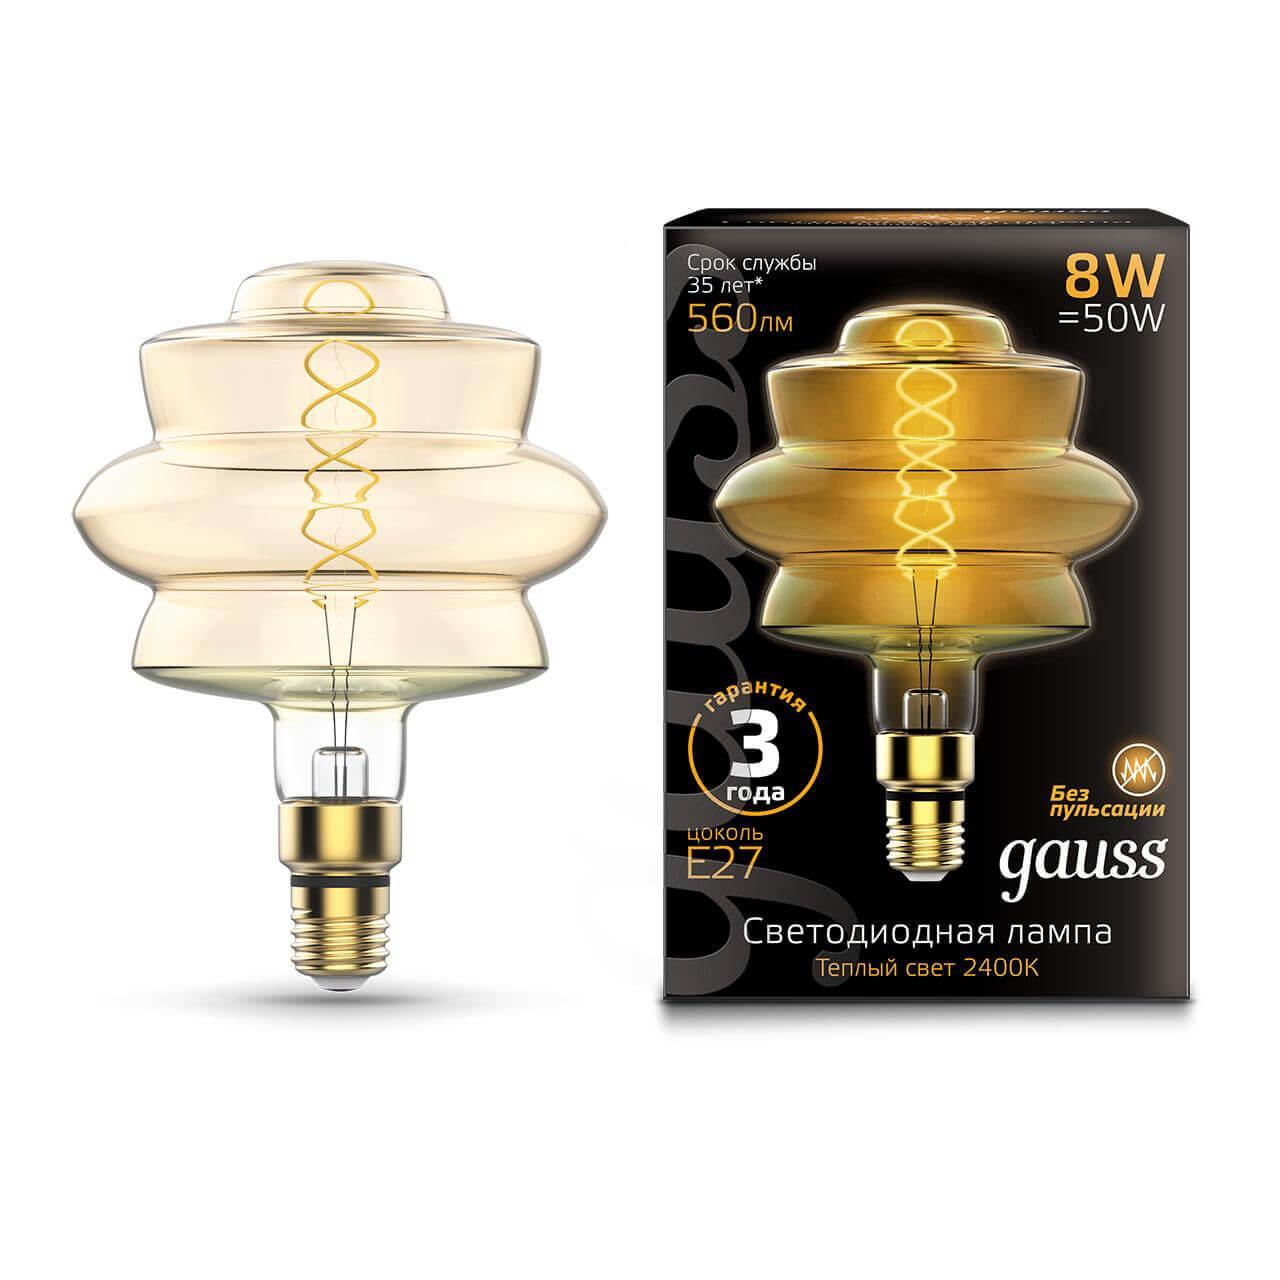 Gauss Лампа Filament BD180 8W 560lm 2400К Е27 golden flexible LED